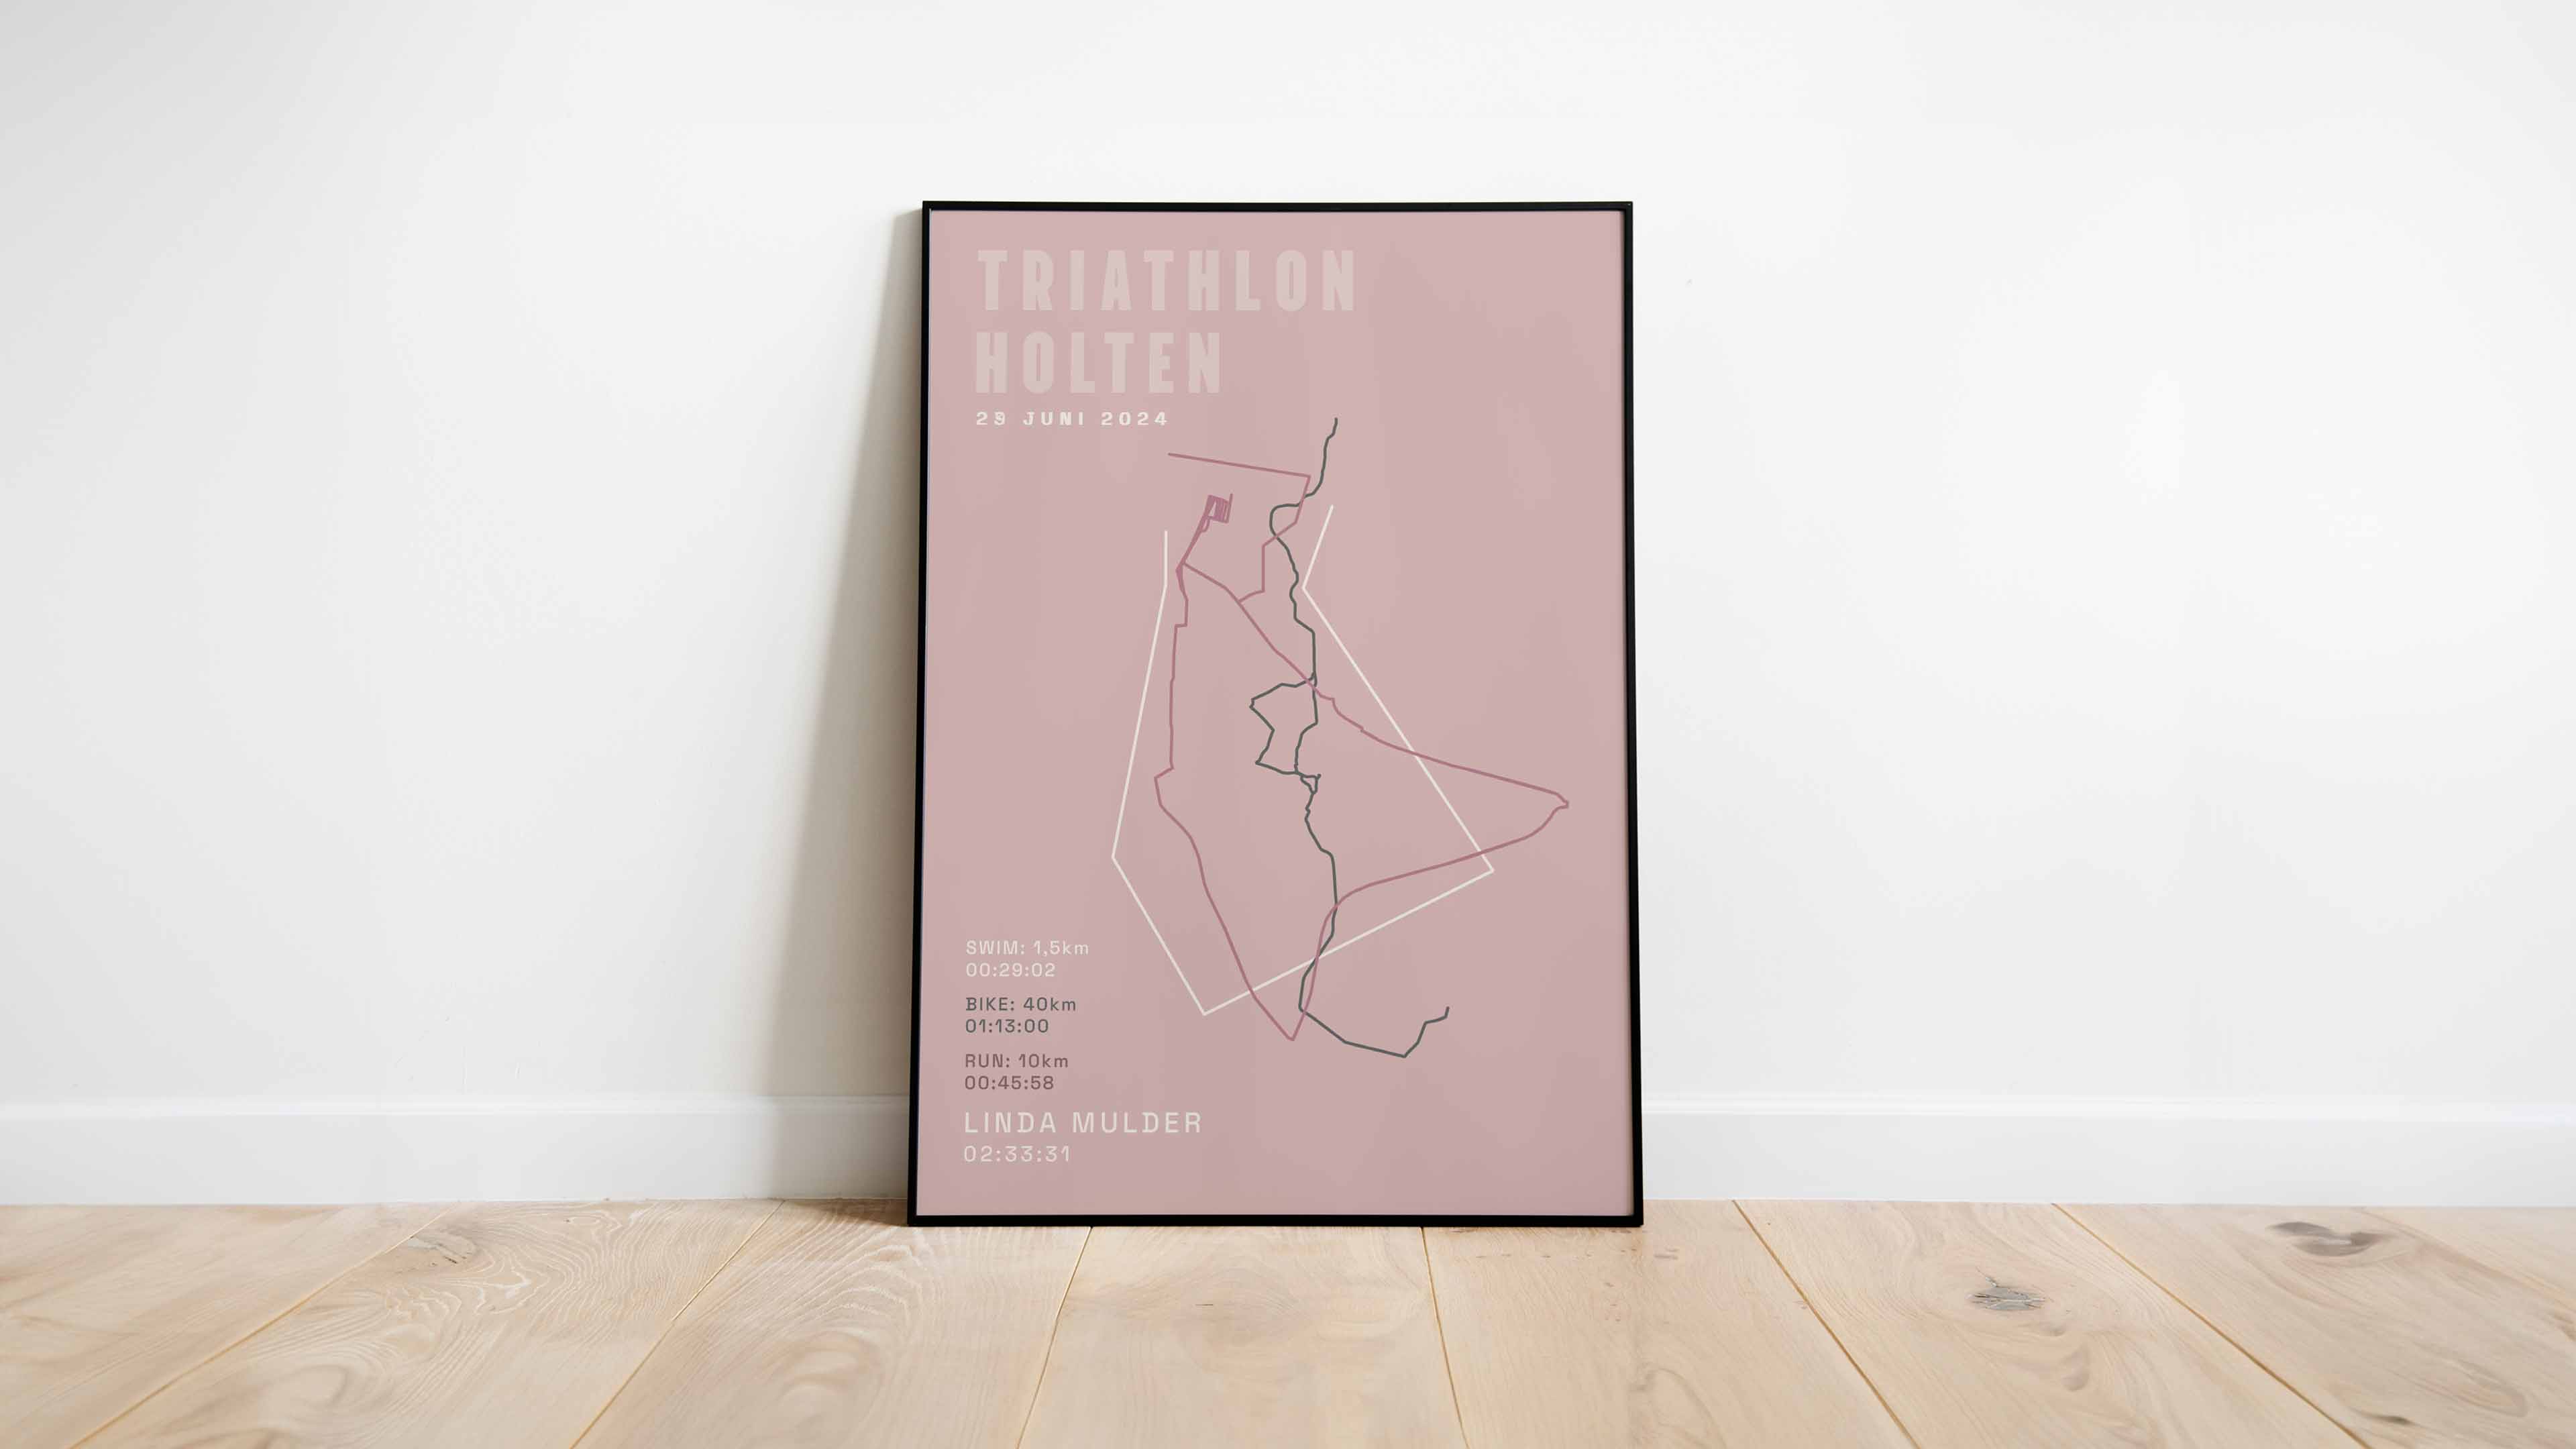 Triathlon Holten - Classic Solid - Poster